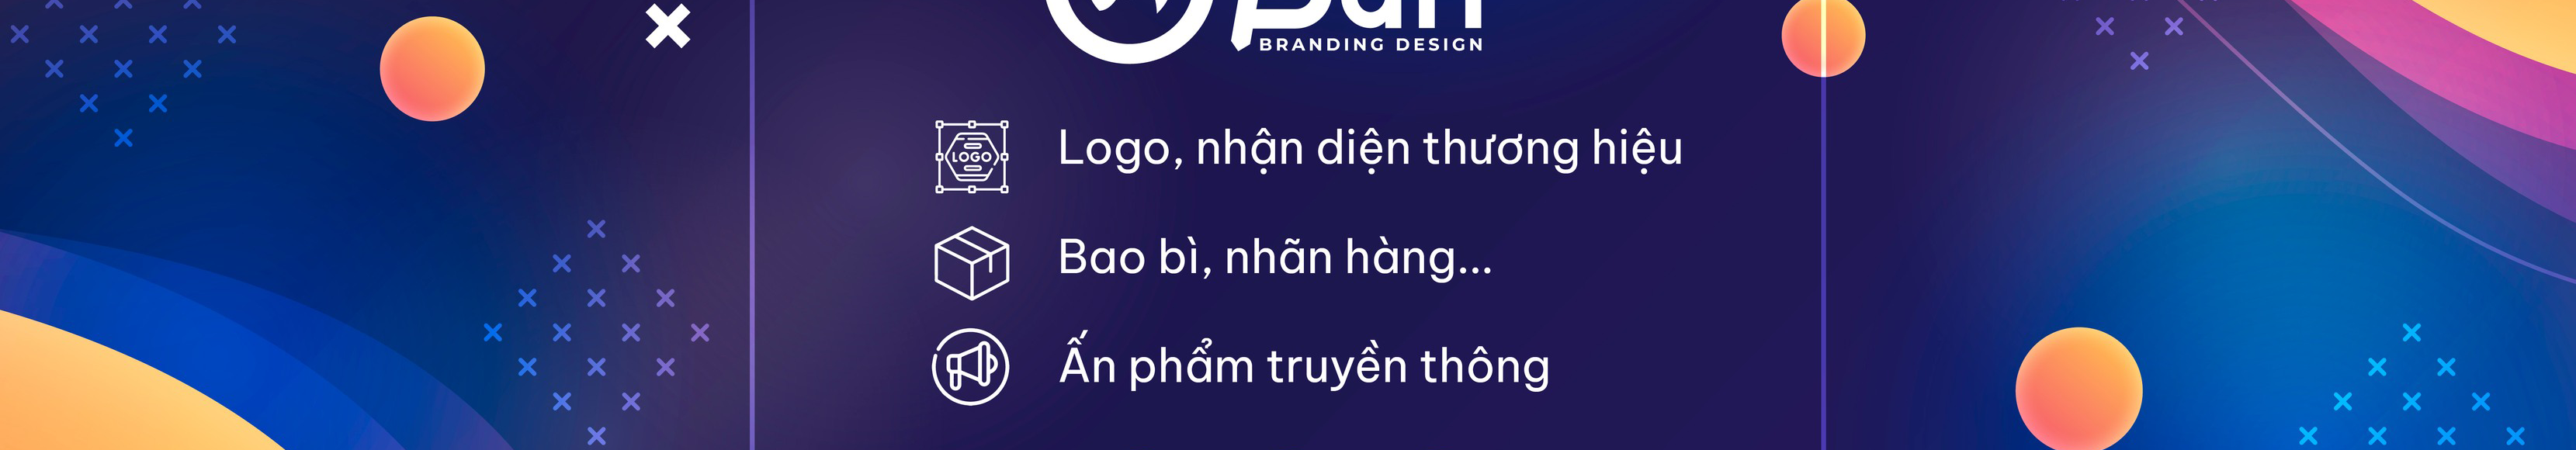 Nguyen Ba Thinh's profile banner